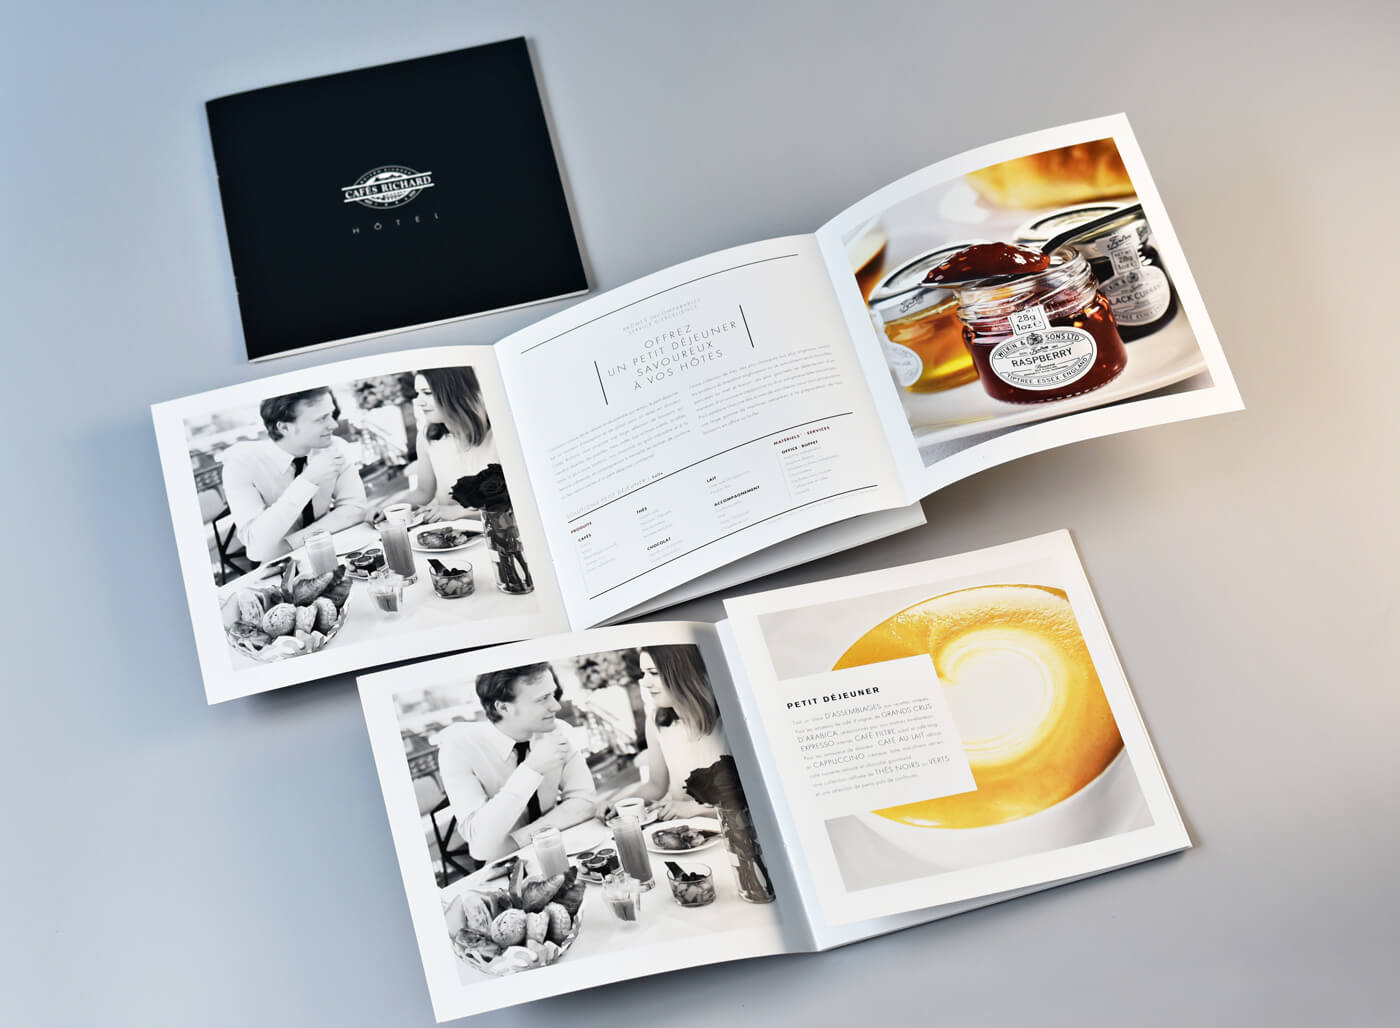 cafés richard - brochure présentation produits